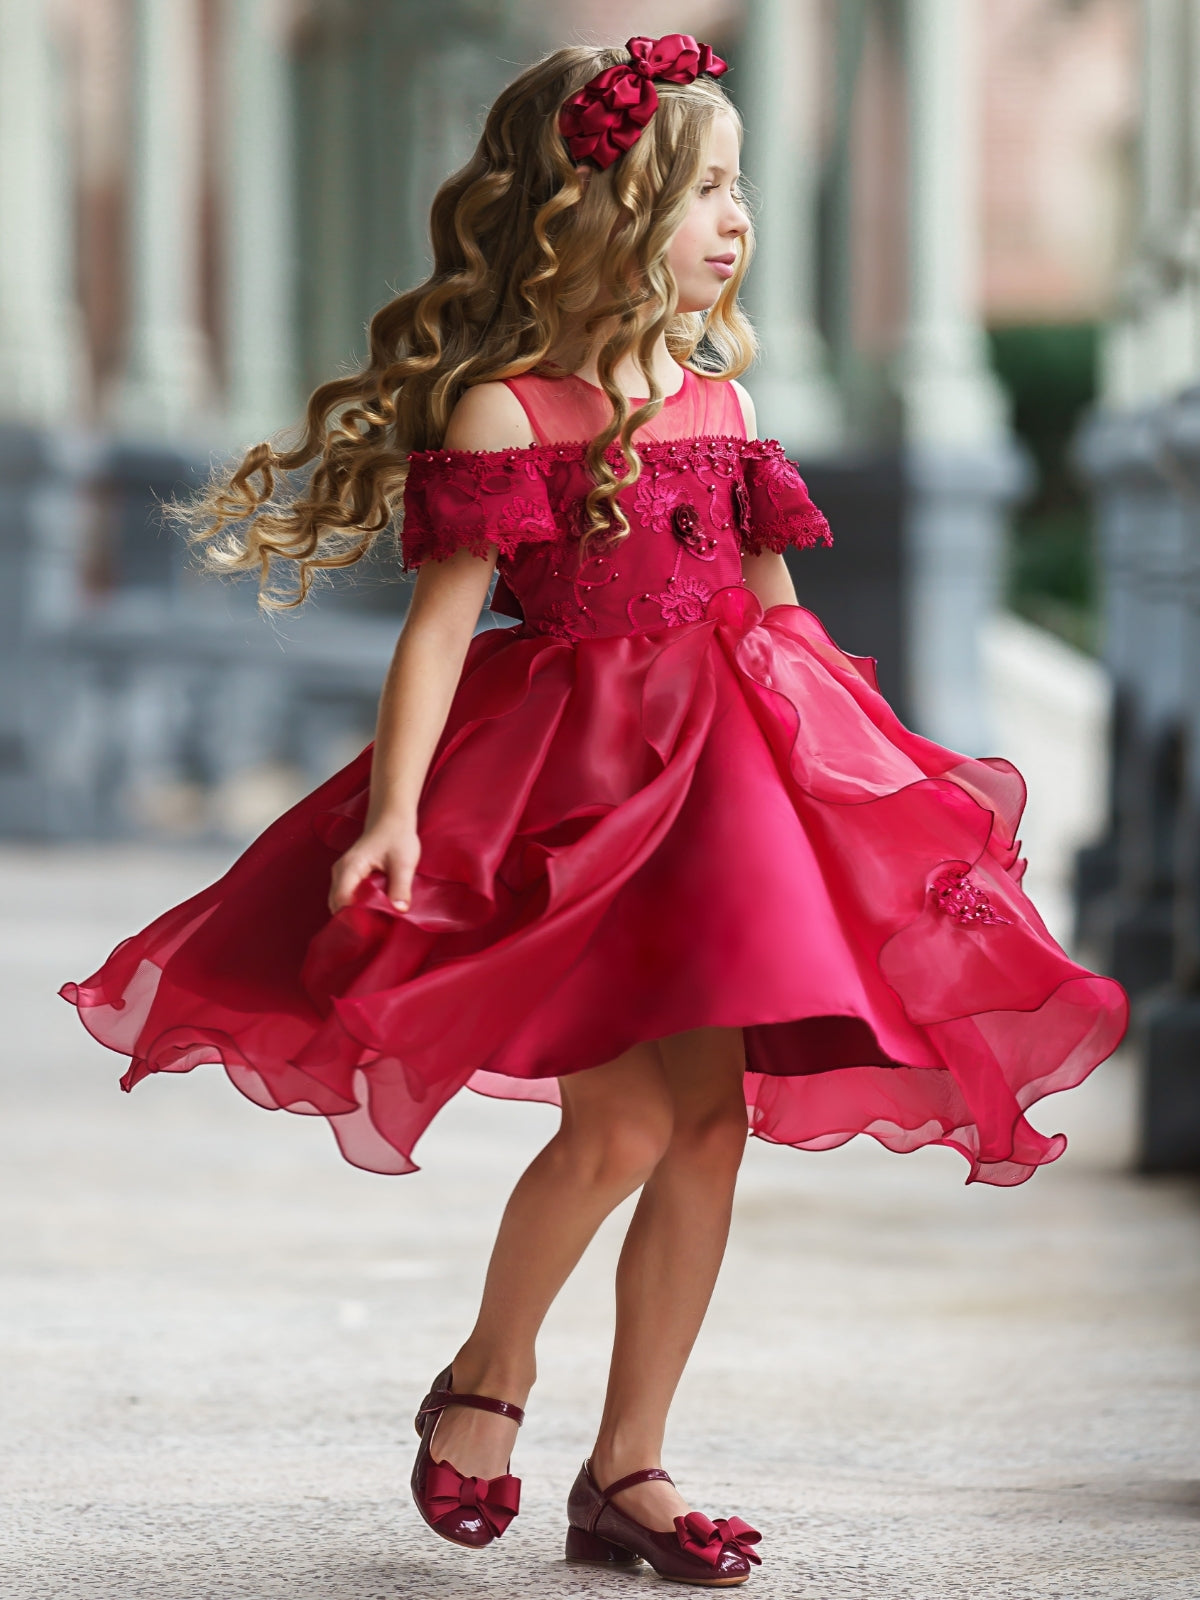 Princess Fancy Girls Gown/Dresses